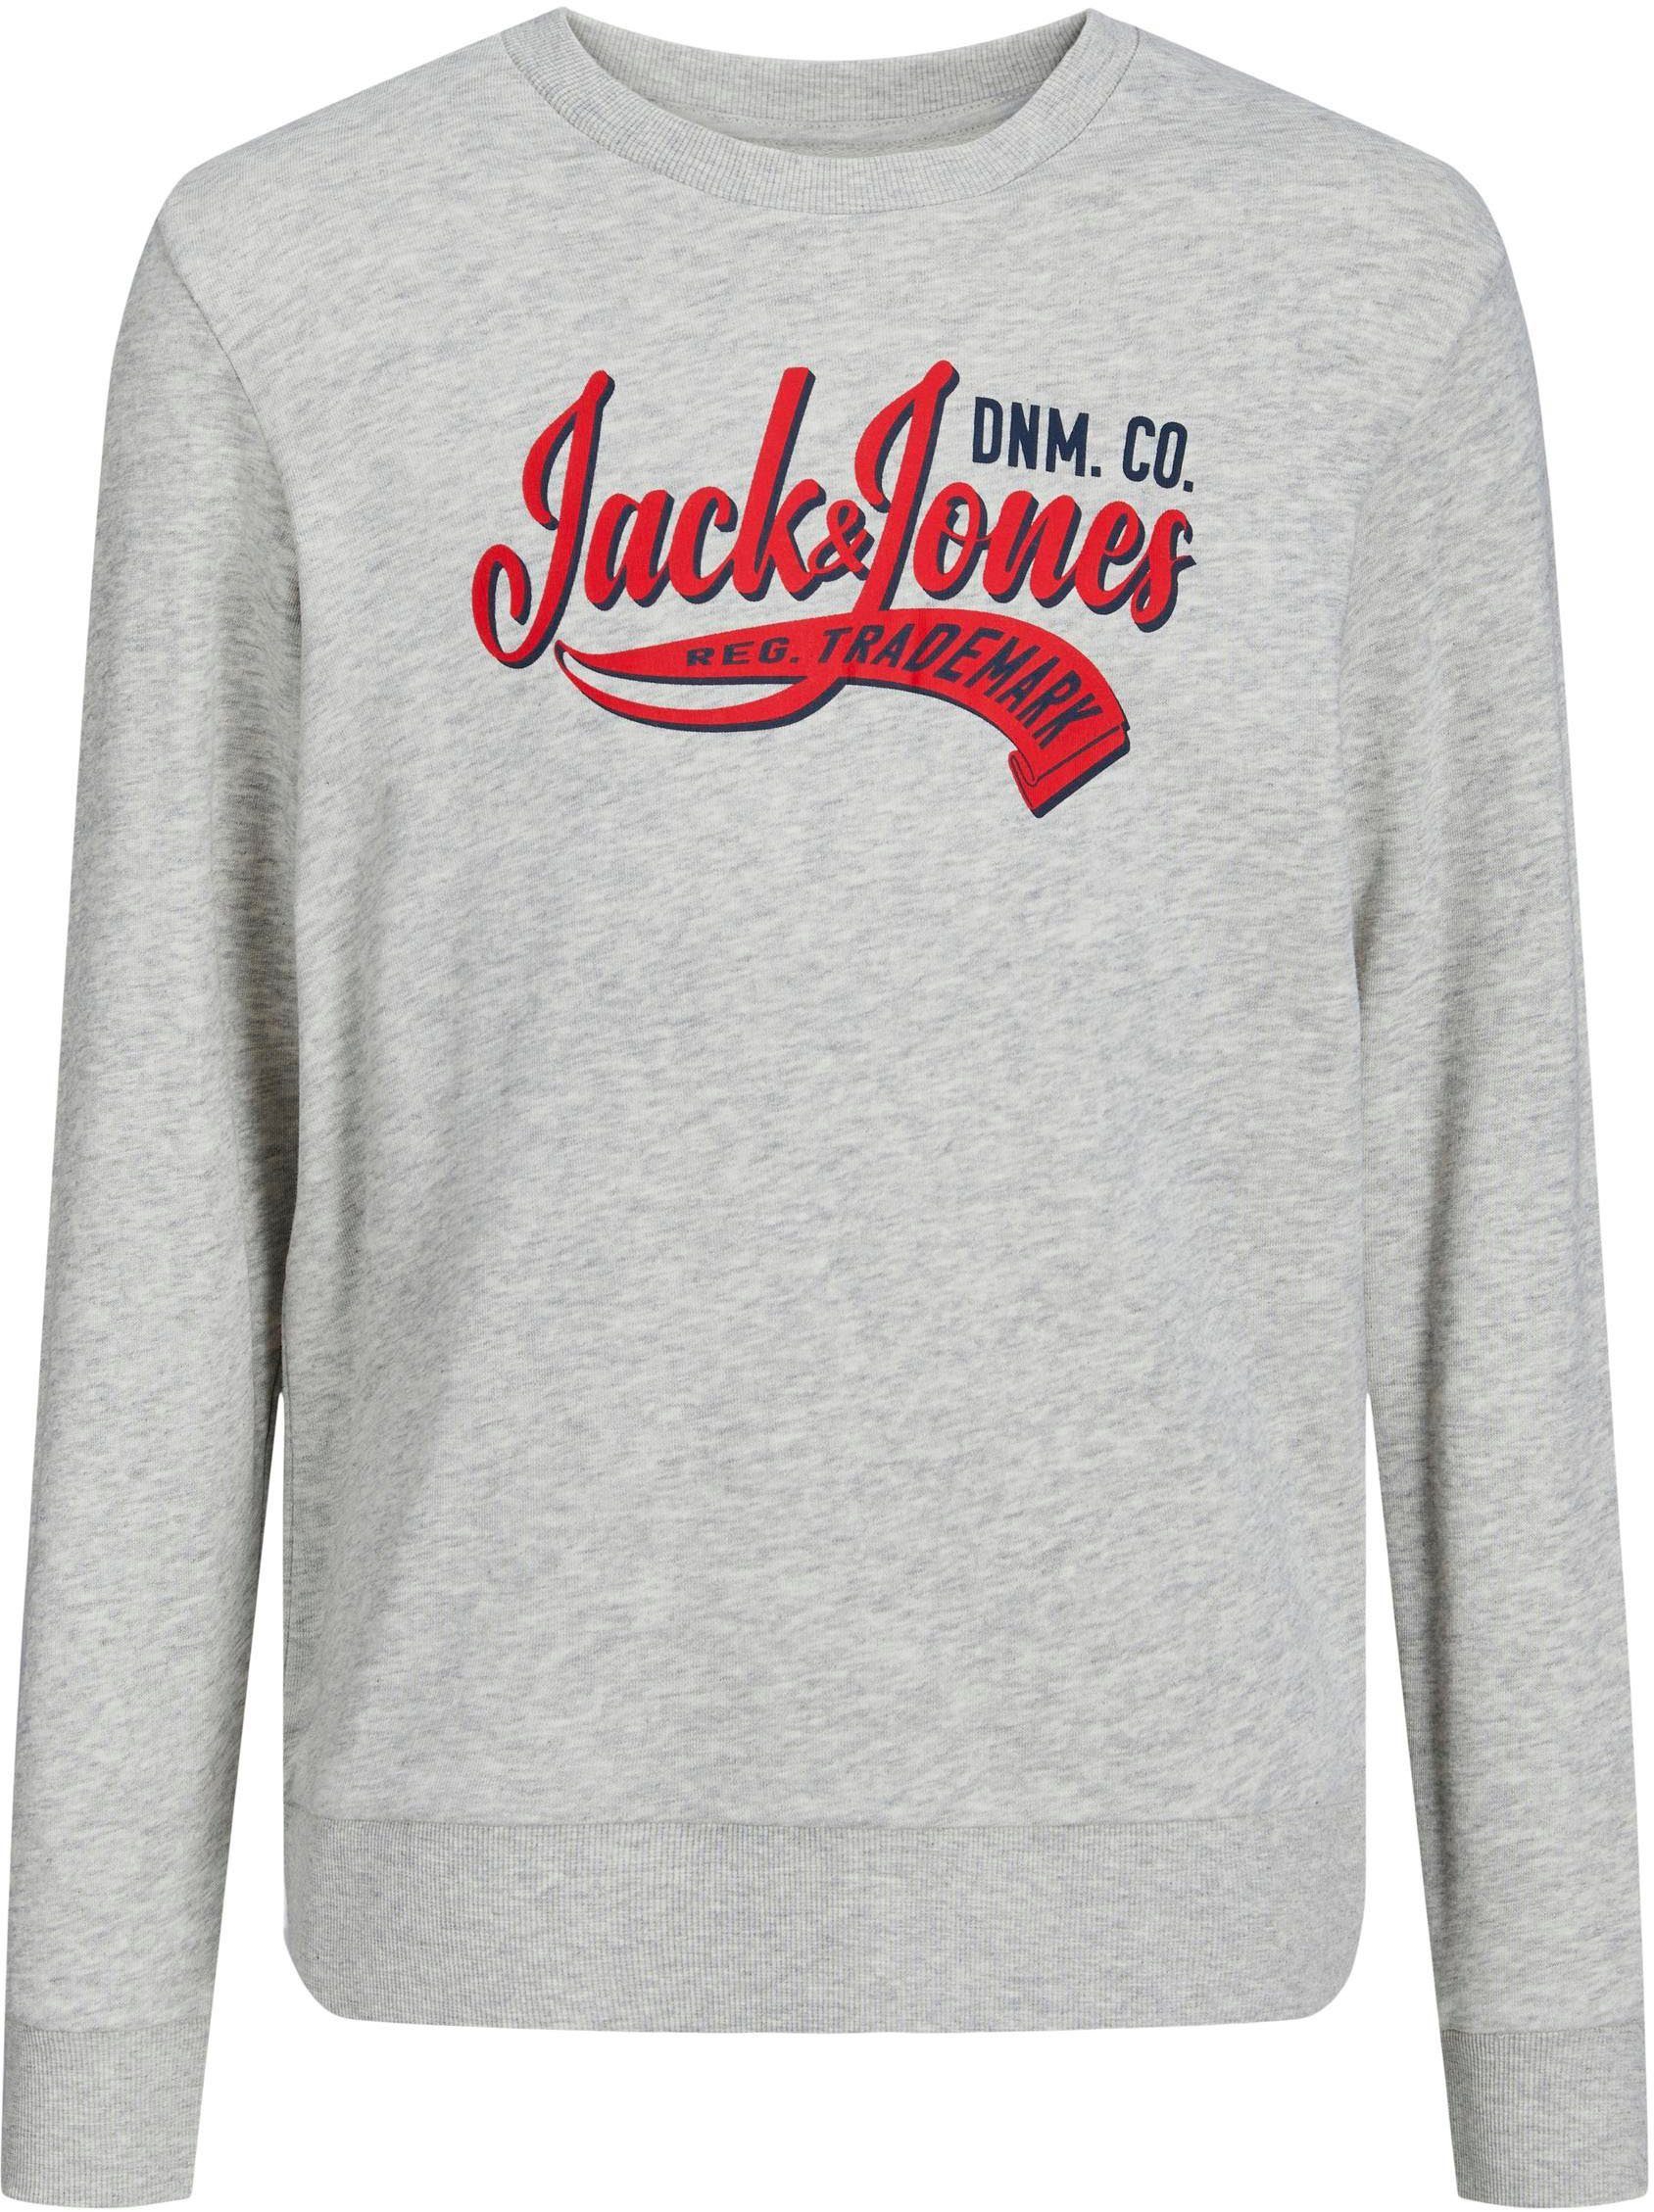 Jones & Junior 2 NECK Jack melange SWEAT white JJELOGO Sweatshirt CREW SS24 JNR COL